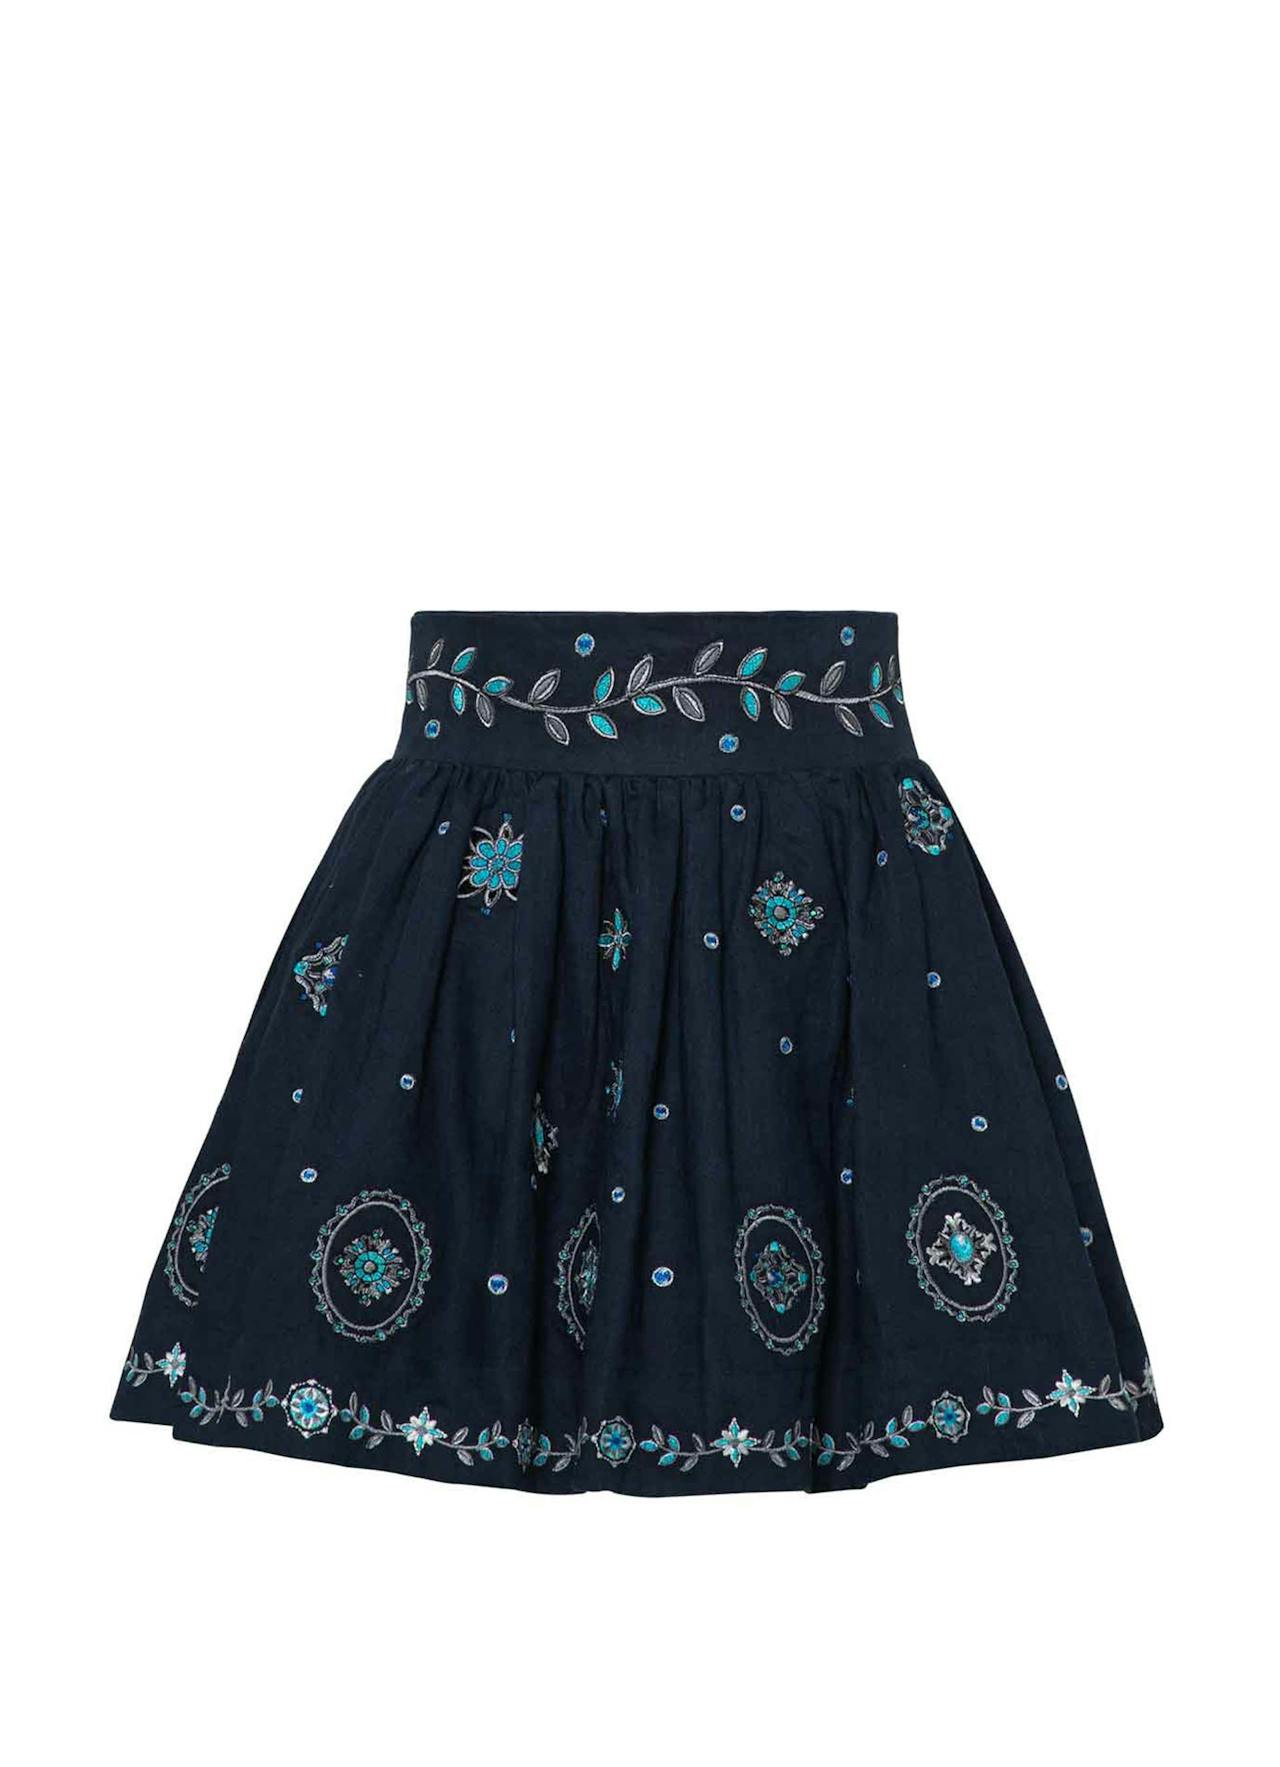 Nori Relicario mini skirt